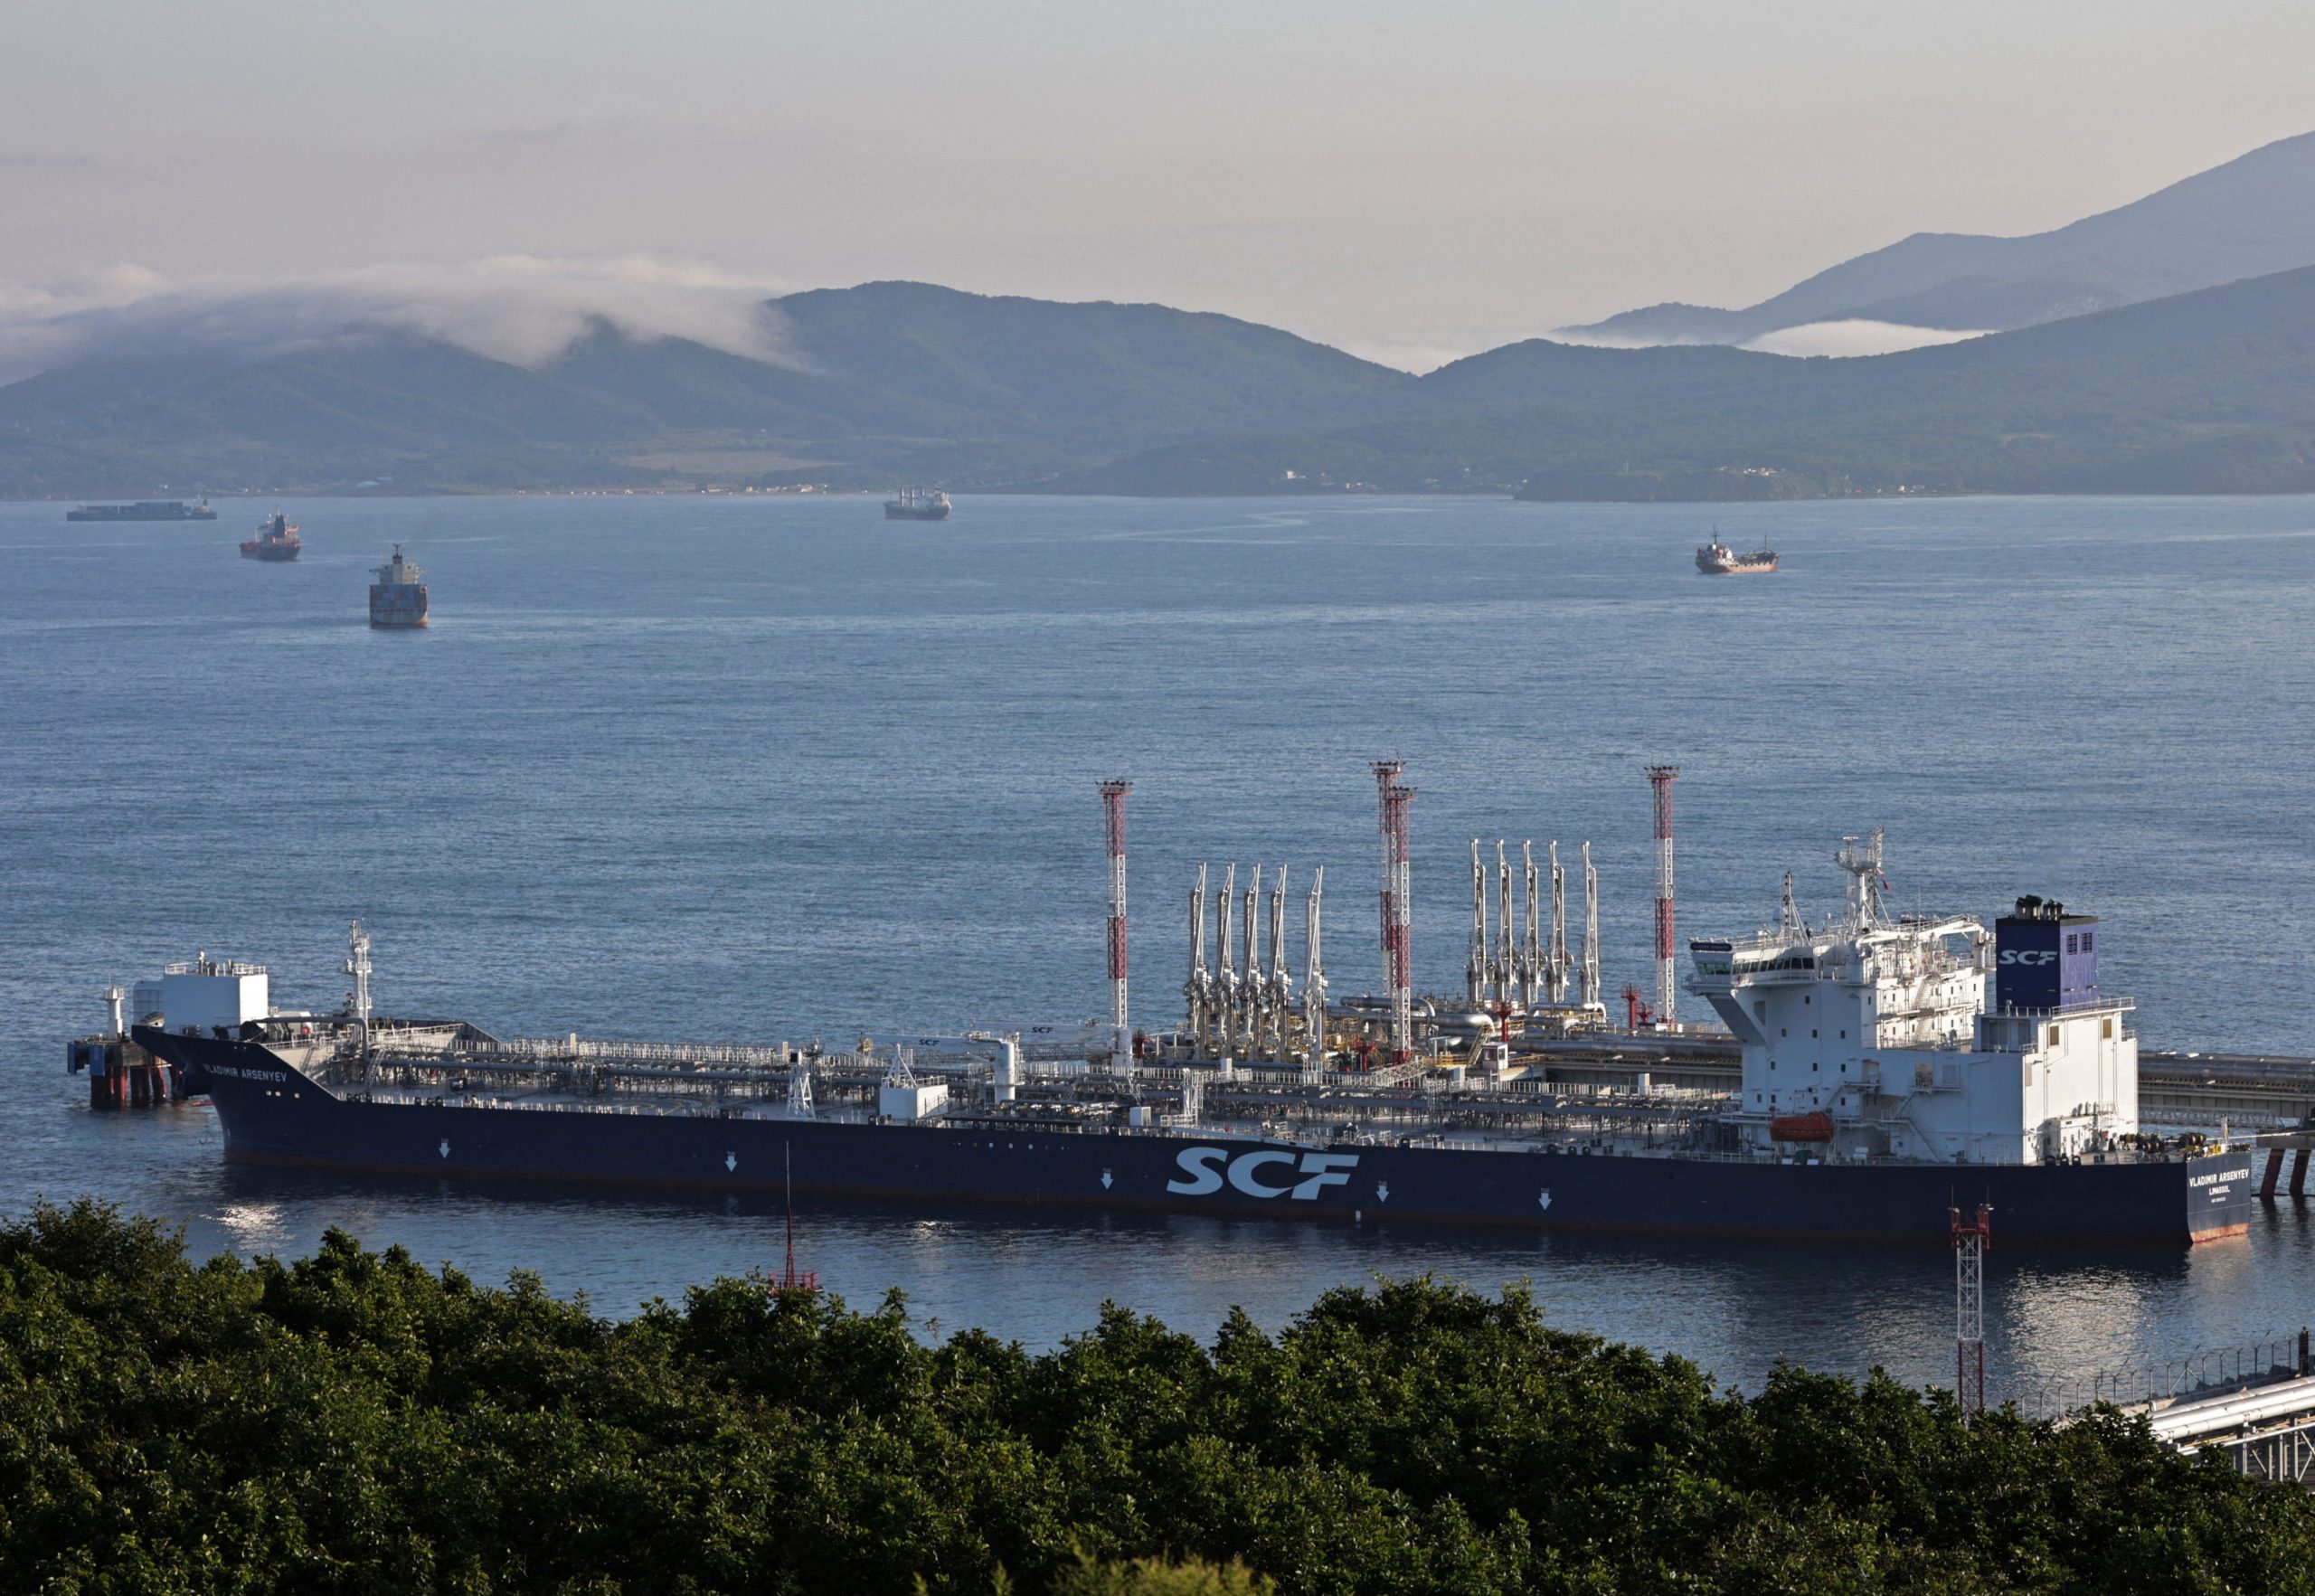 Russia Faces Oil Shut-In or Price Cap Amid Sanctions